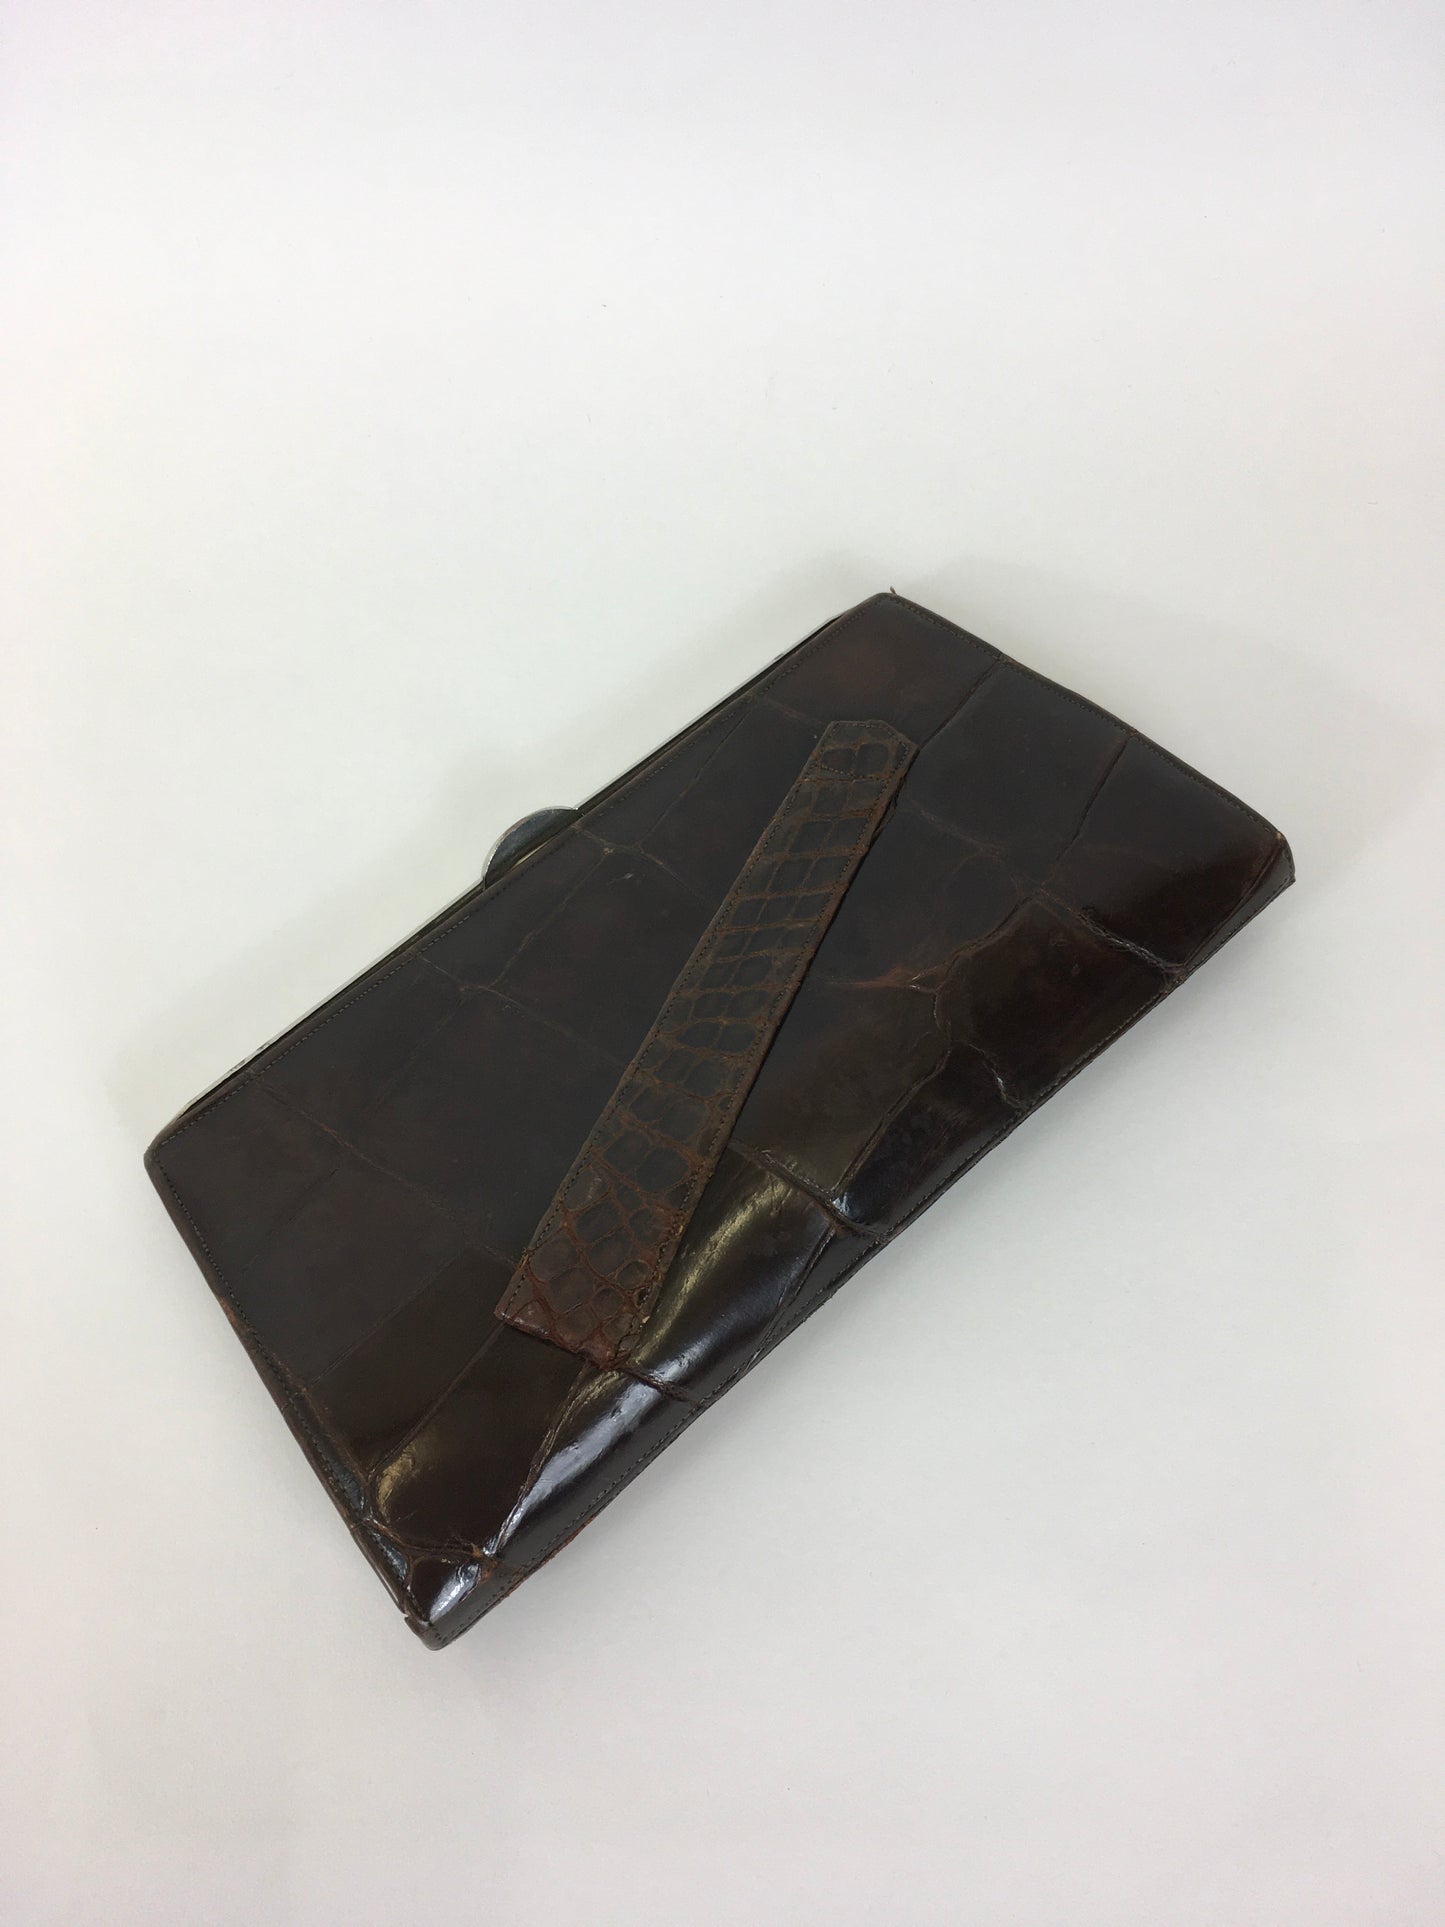 Original 1930’s Deco Crocodile Clutch Handbag - In A Warm Brown with Chrome Detailing